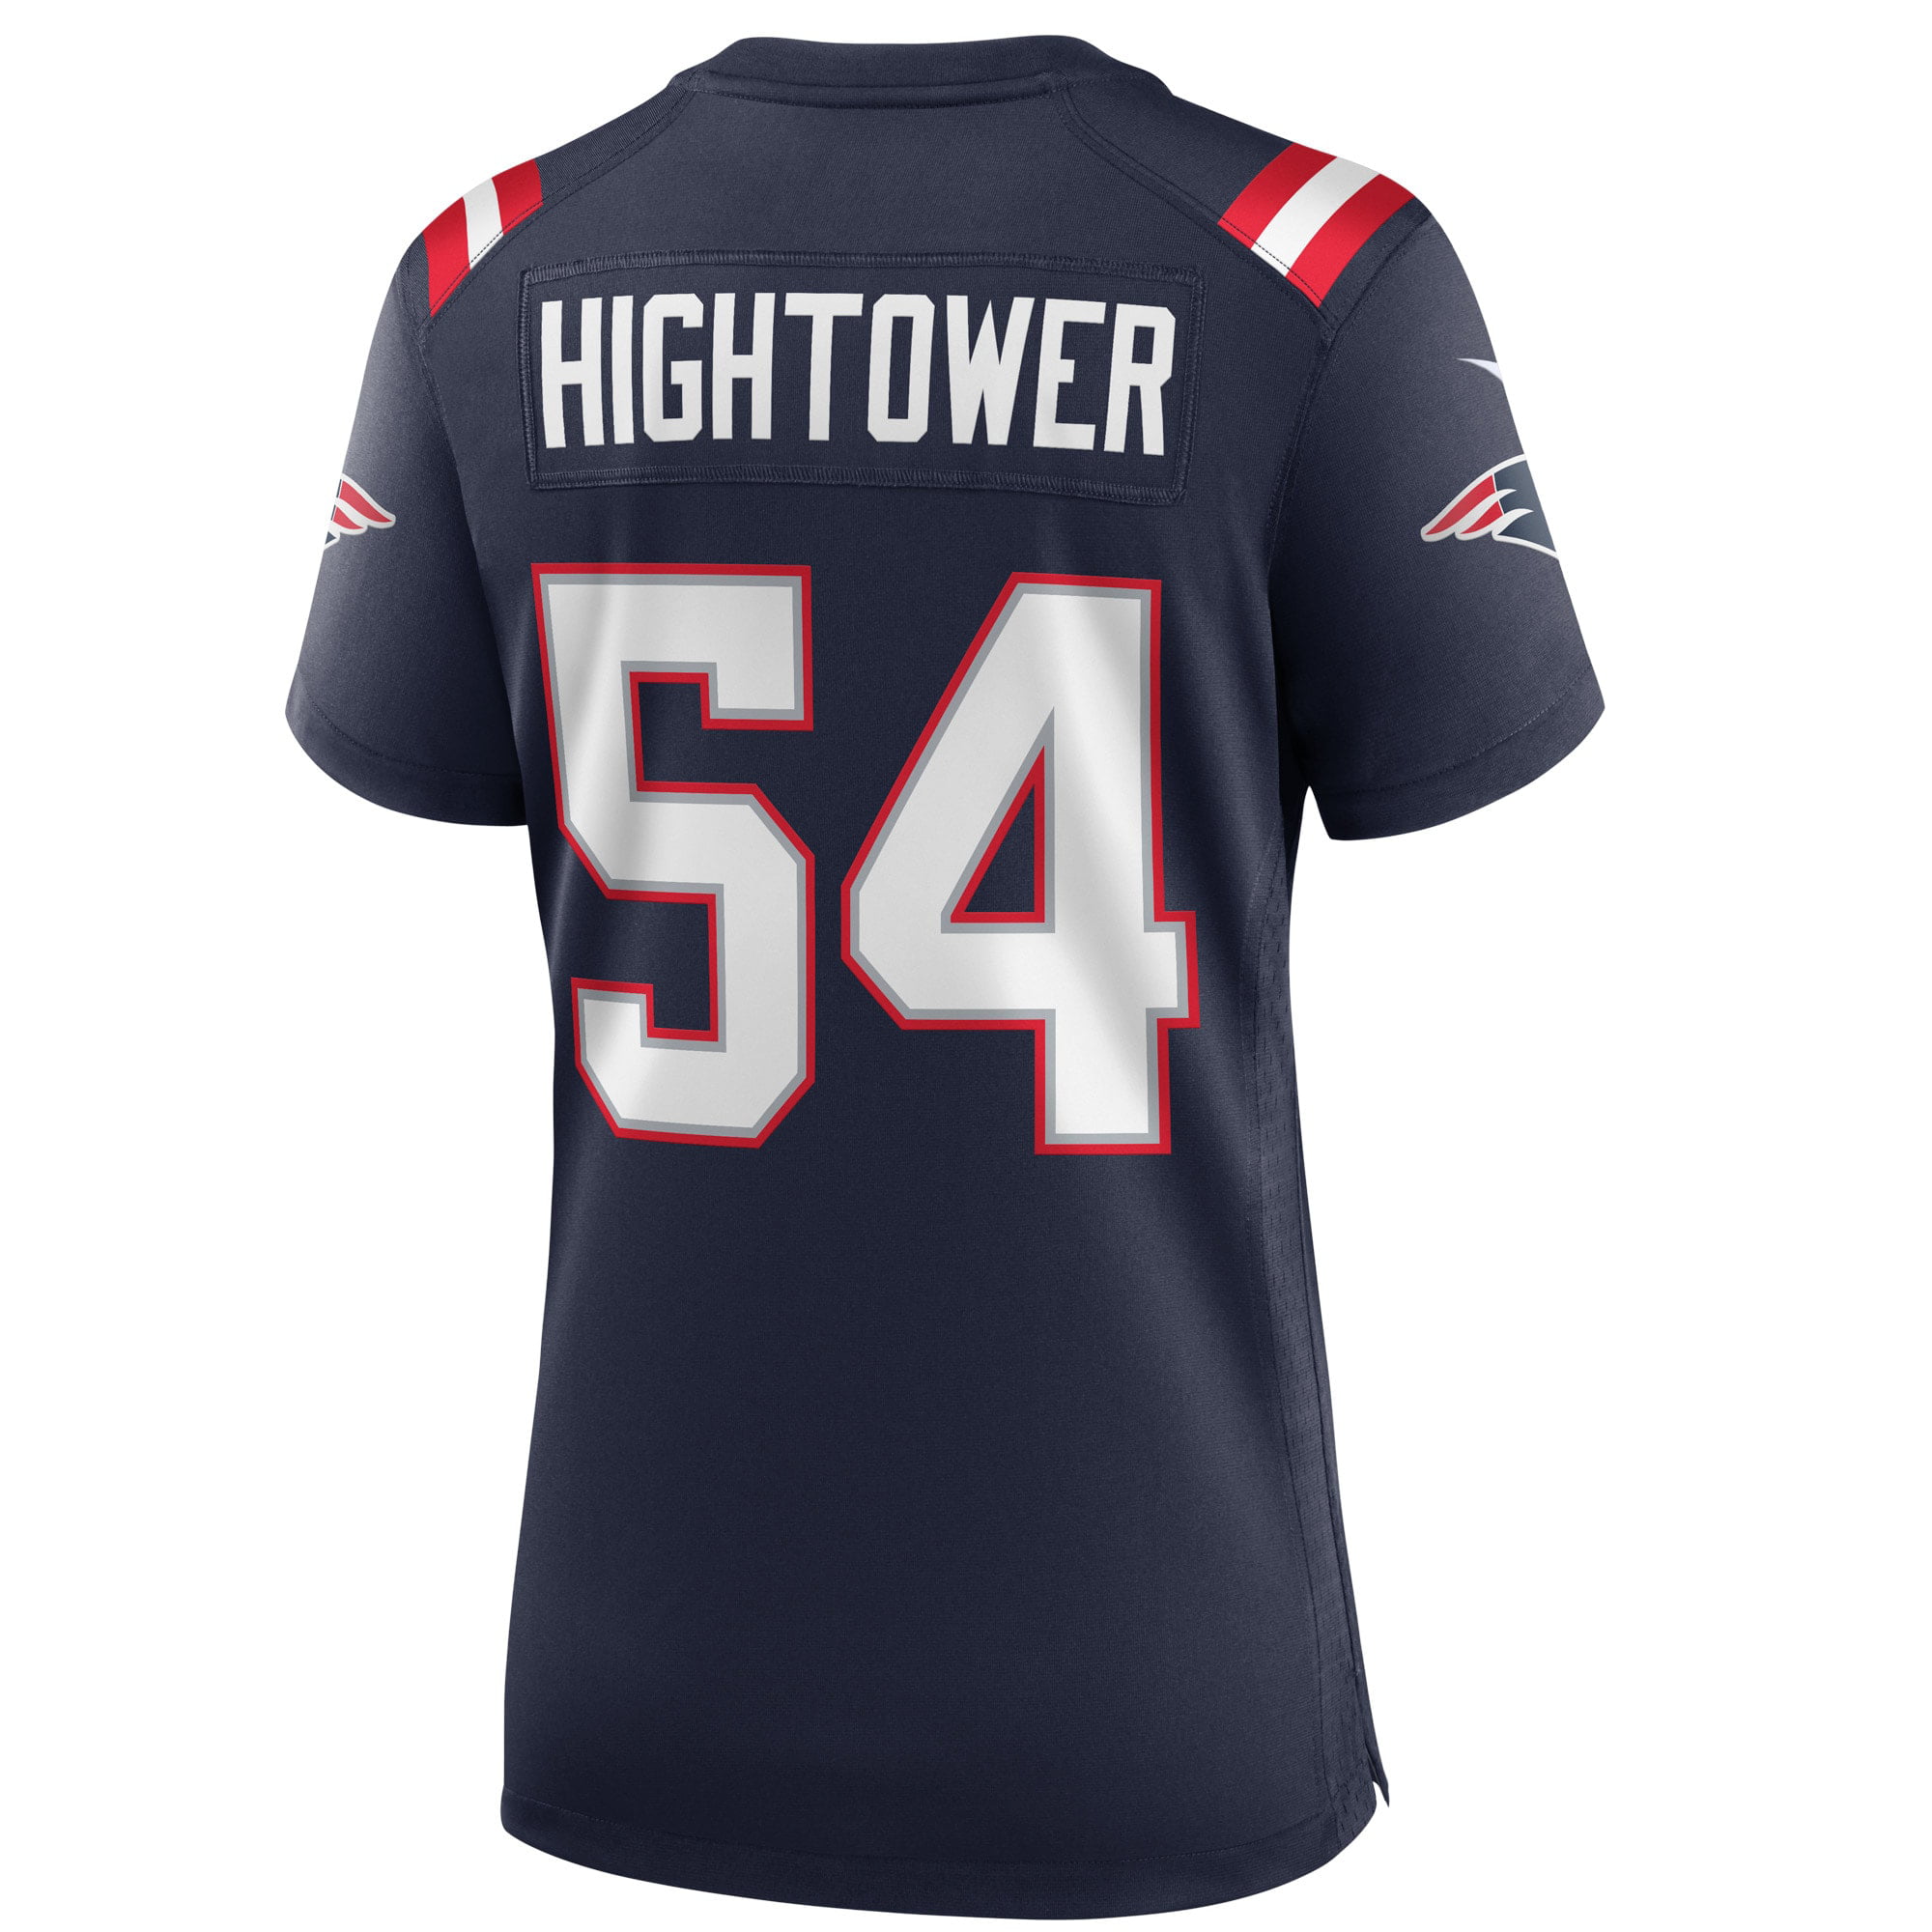 hightower jersey